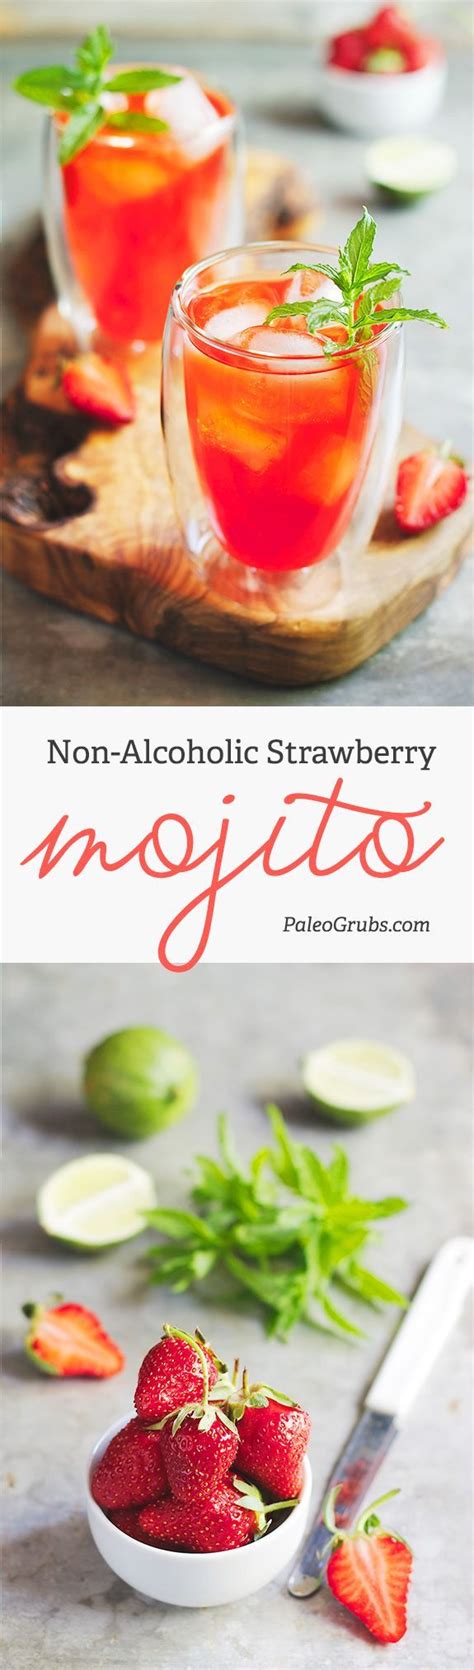 Non Alcoholic Paleo Strawberry Mojito Paleo Grubs Recipe Paleo